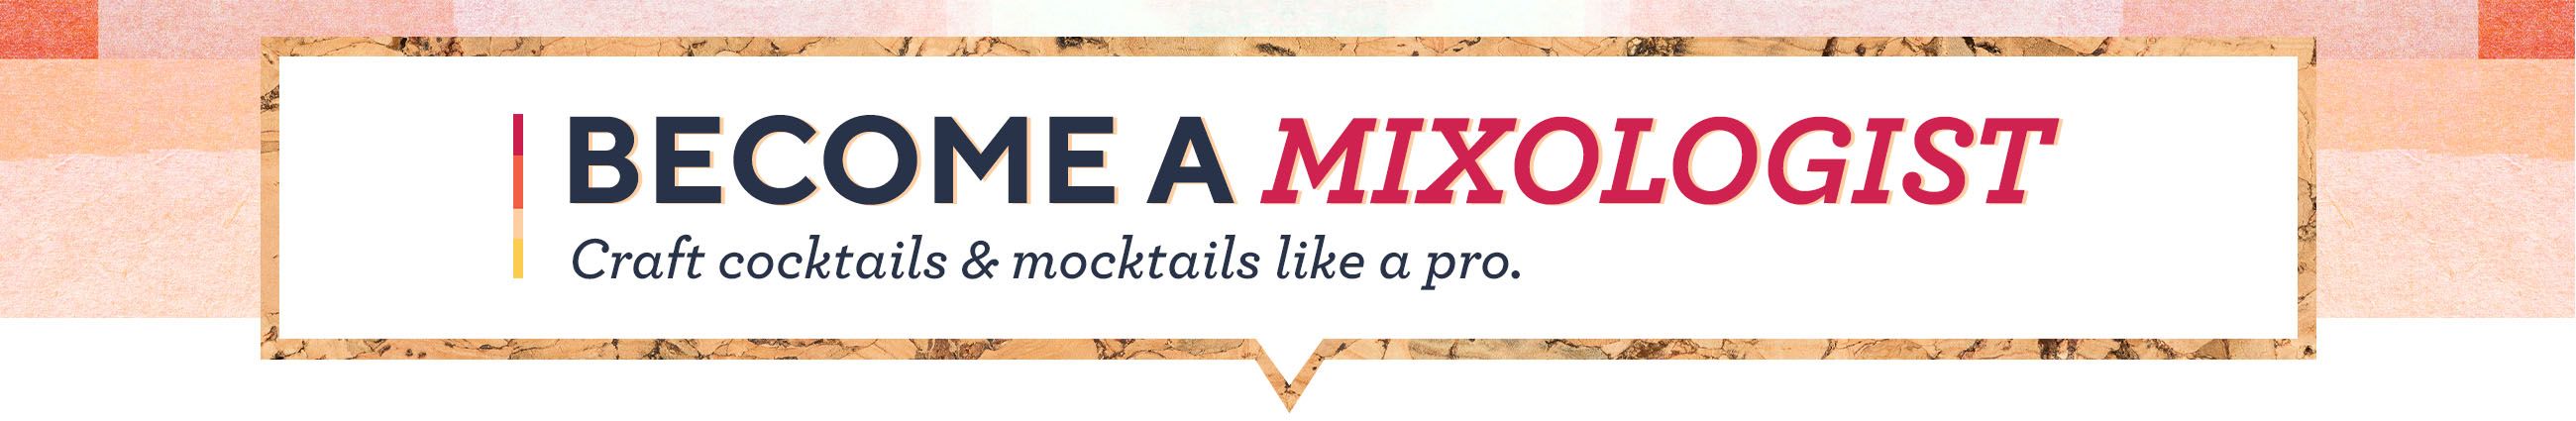 Become a Mixologist. Craft cocktails & mocktails like a pro. 